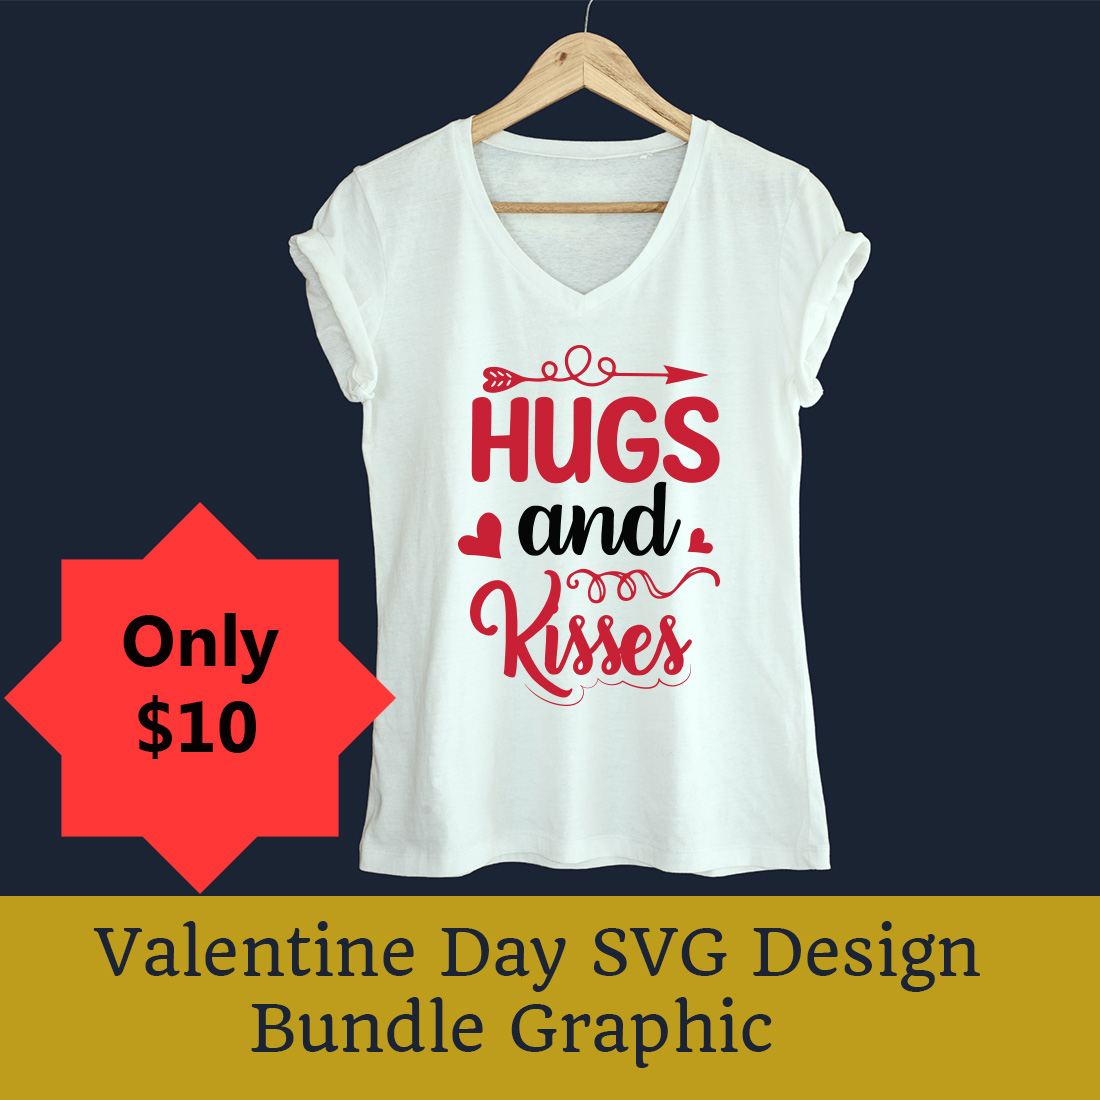 Valentine Day SVG Design Bundle Graphic cover image.